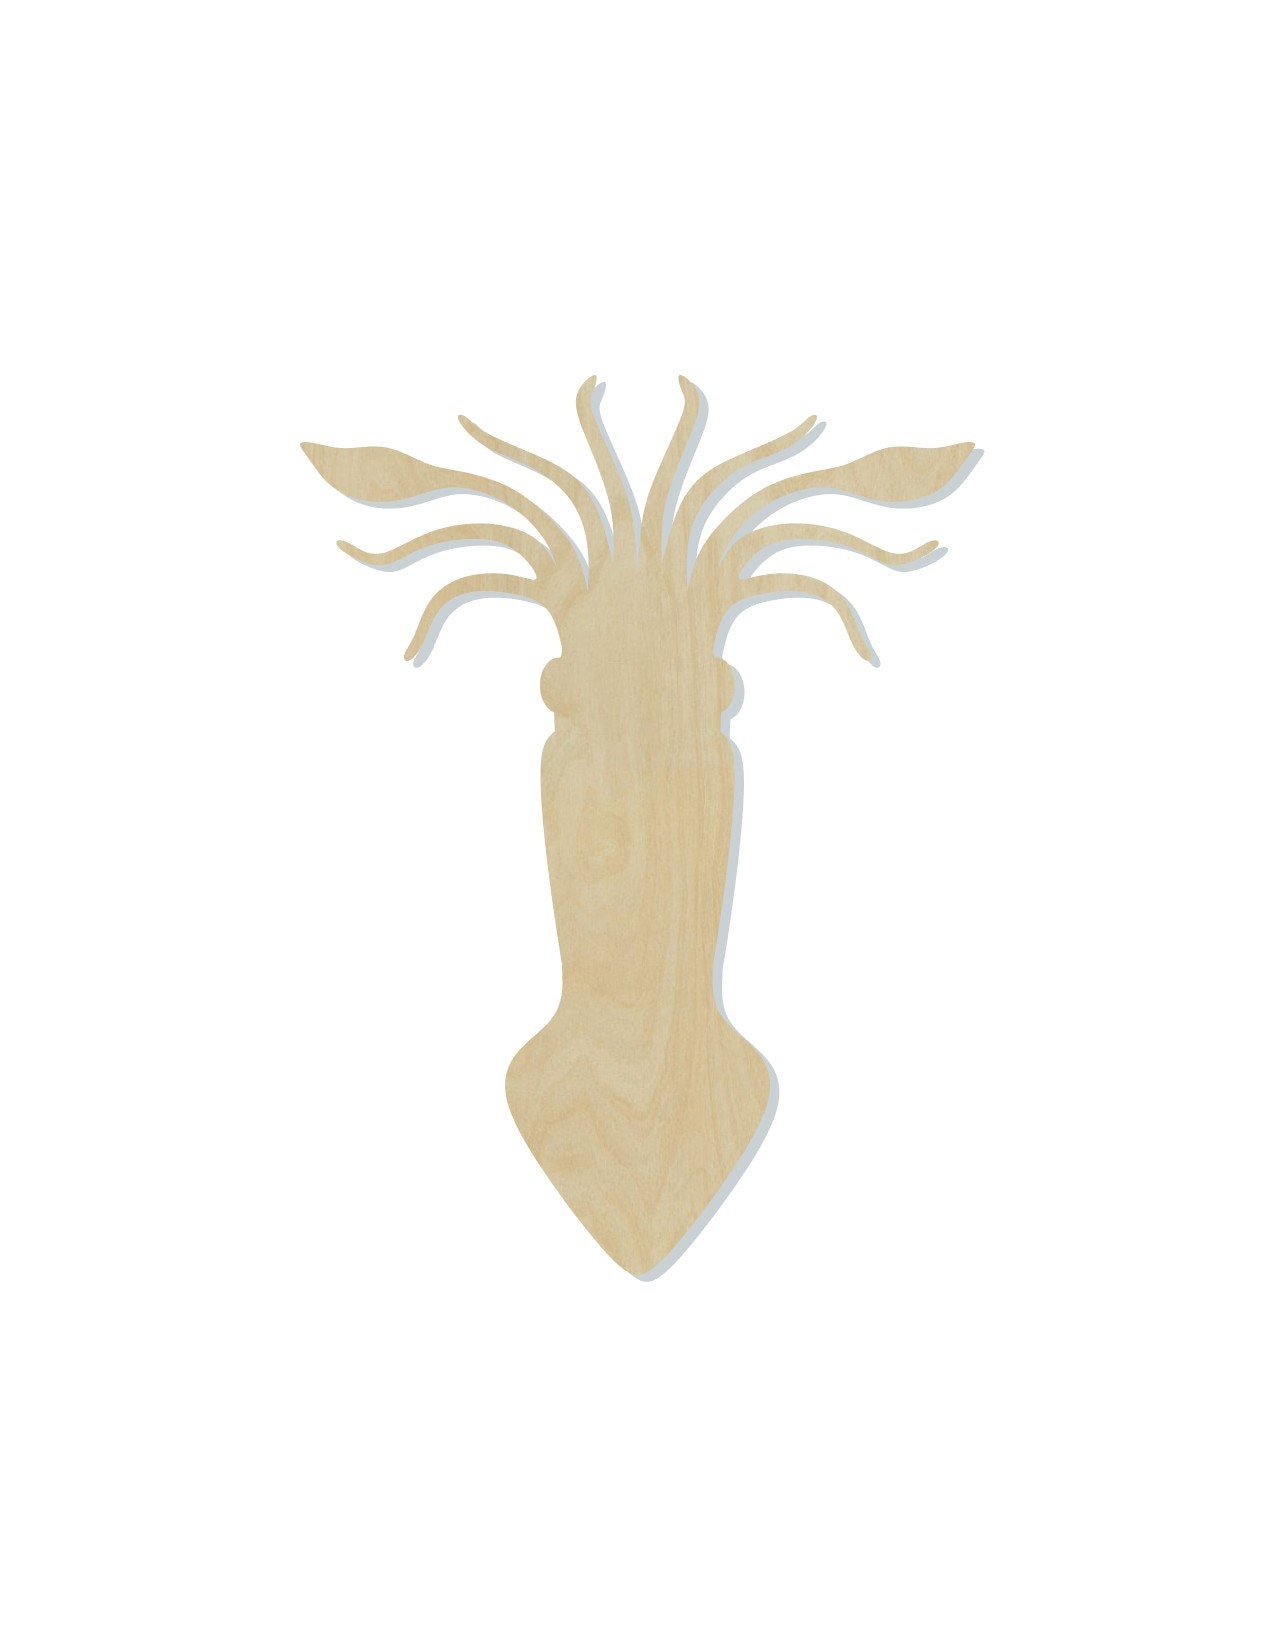 Squid wood shape wood cutouts Ocean animals Sea life Beach DIY | Etsy